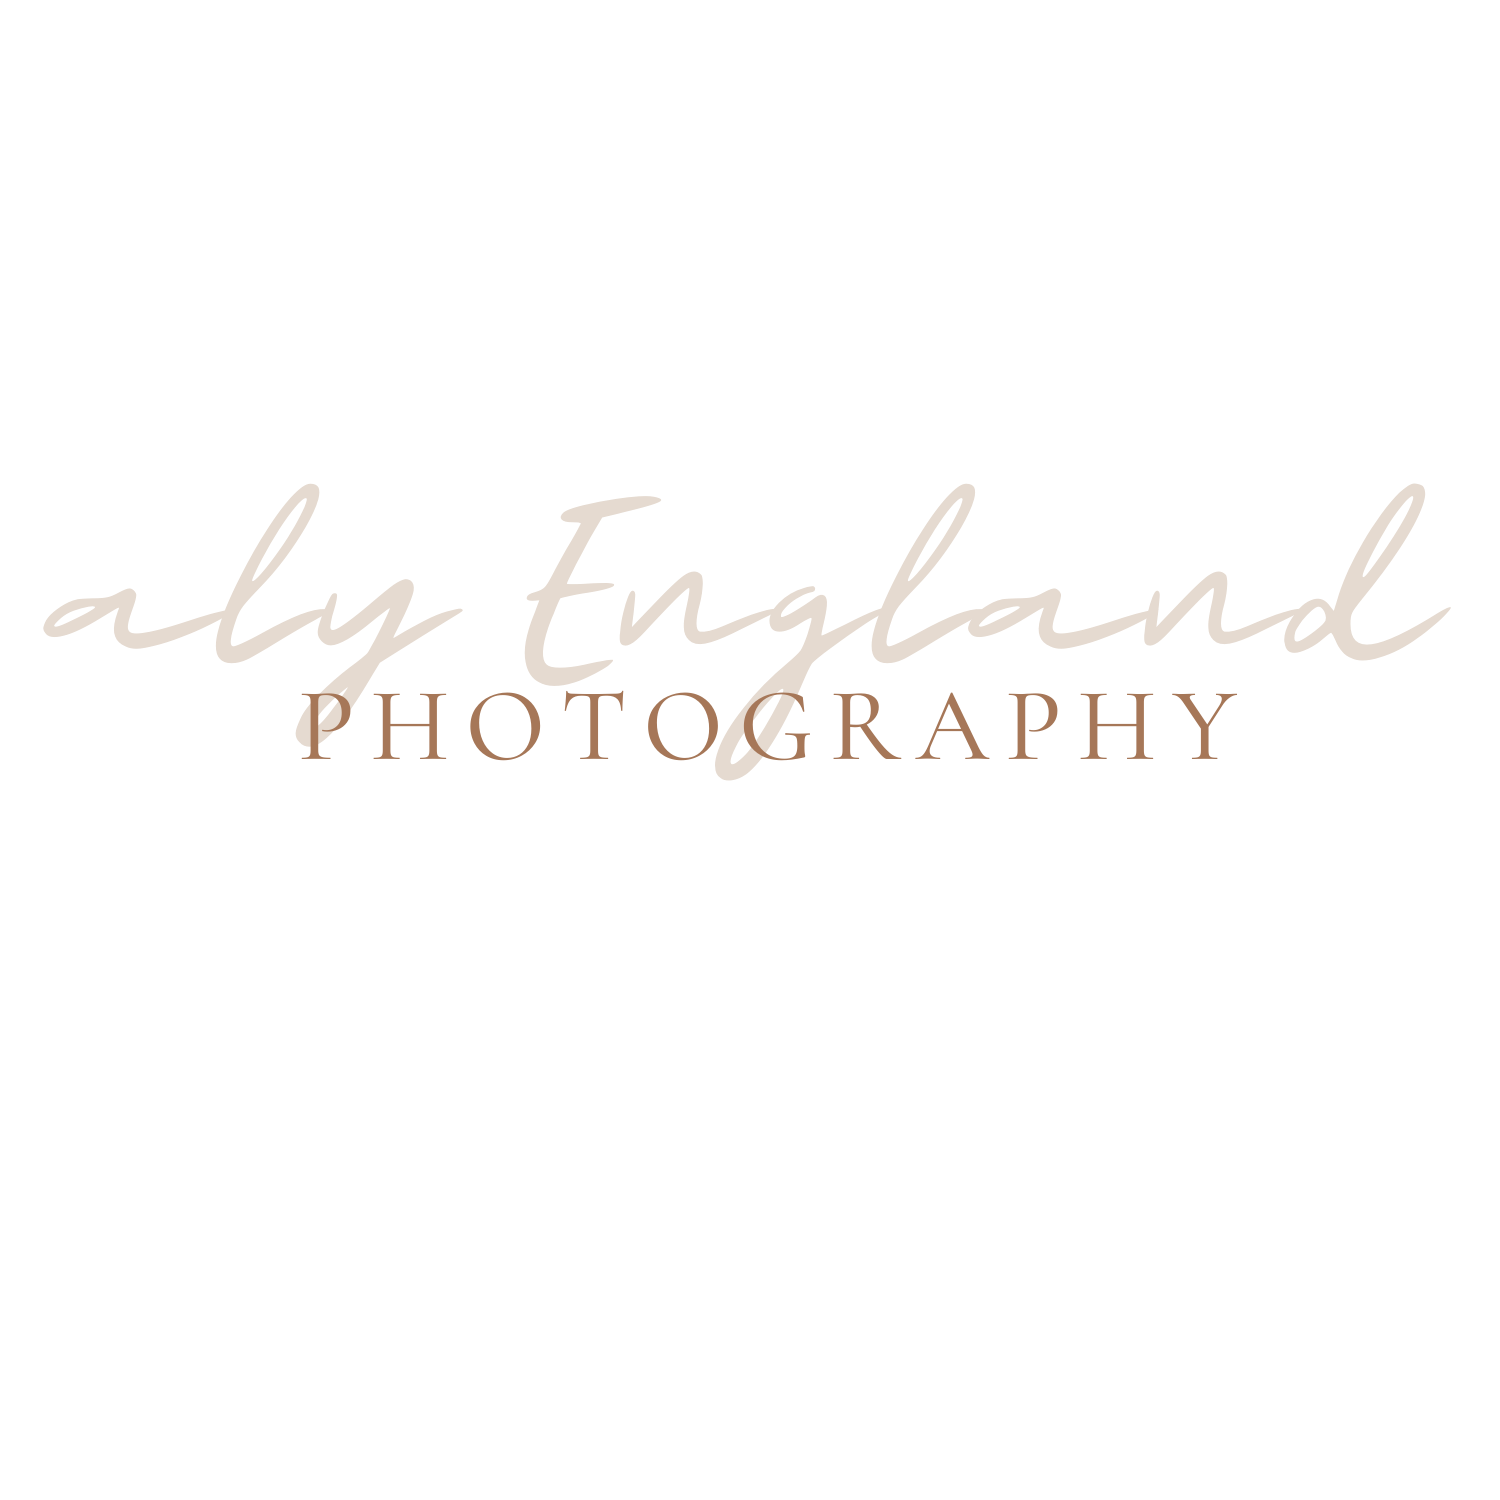 Aly England Photography | Arkansas Wedding Photographer